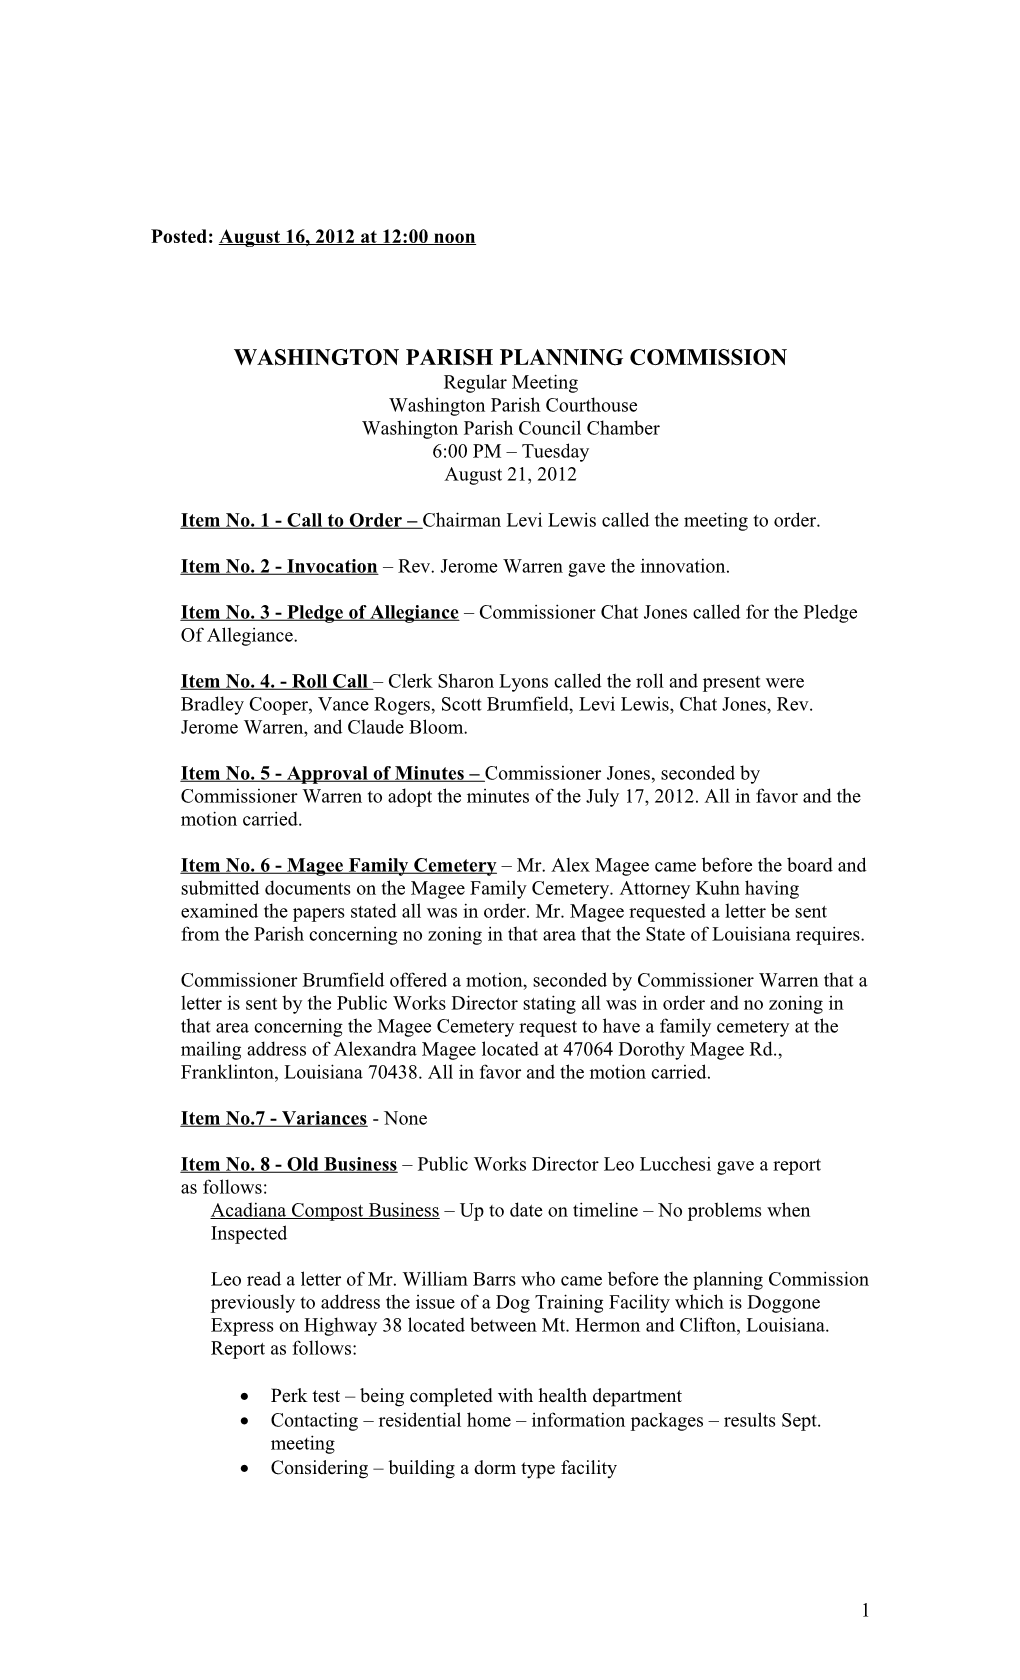 Washington Parish Planning Commission s1